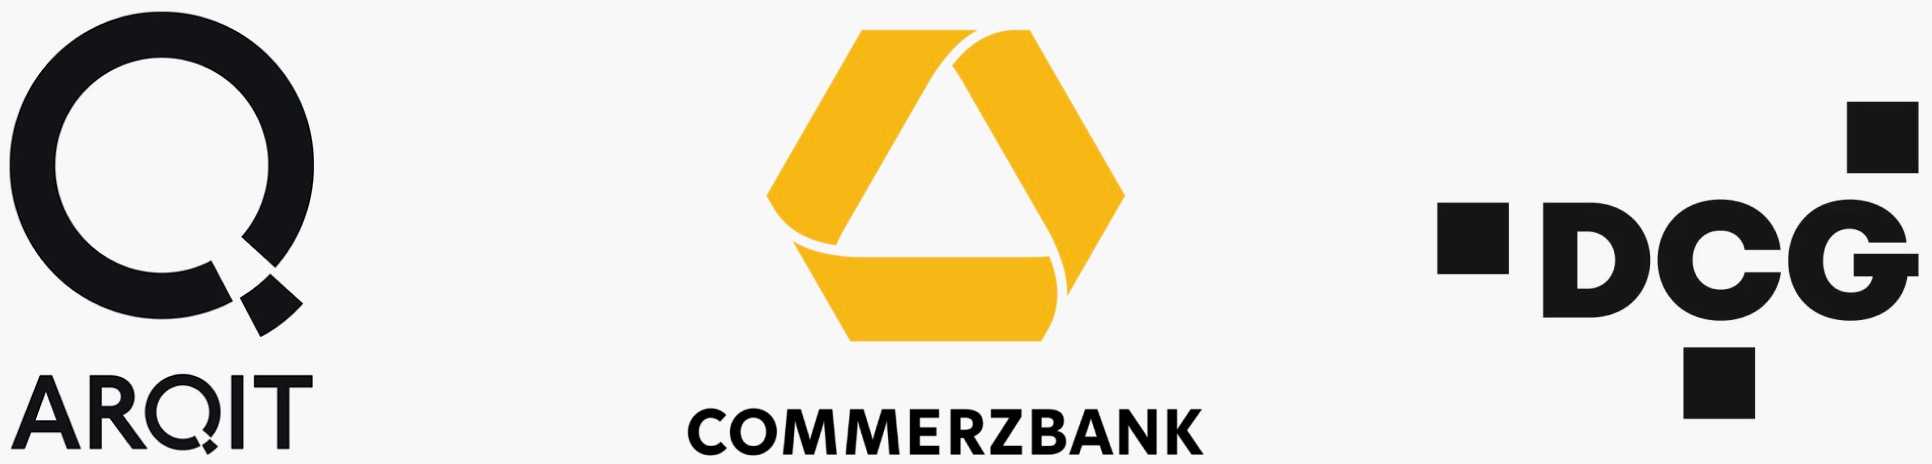 Clients: Arqit Quantum Digital, Commerzbank, Currency Group